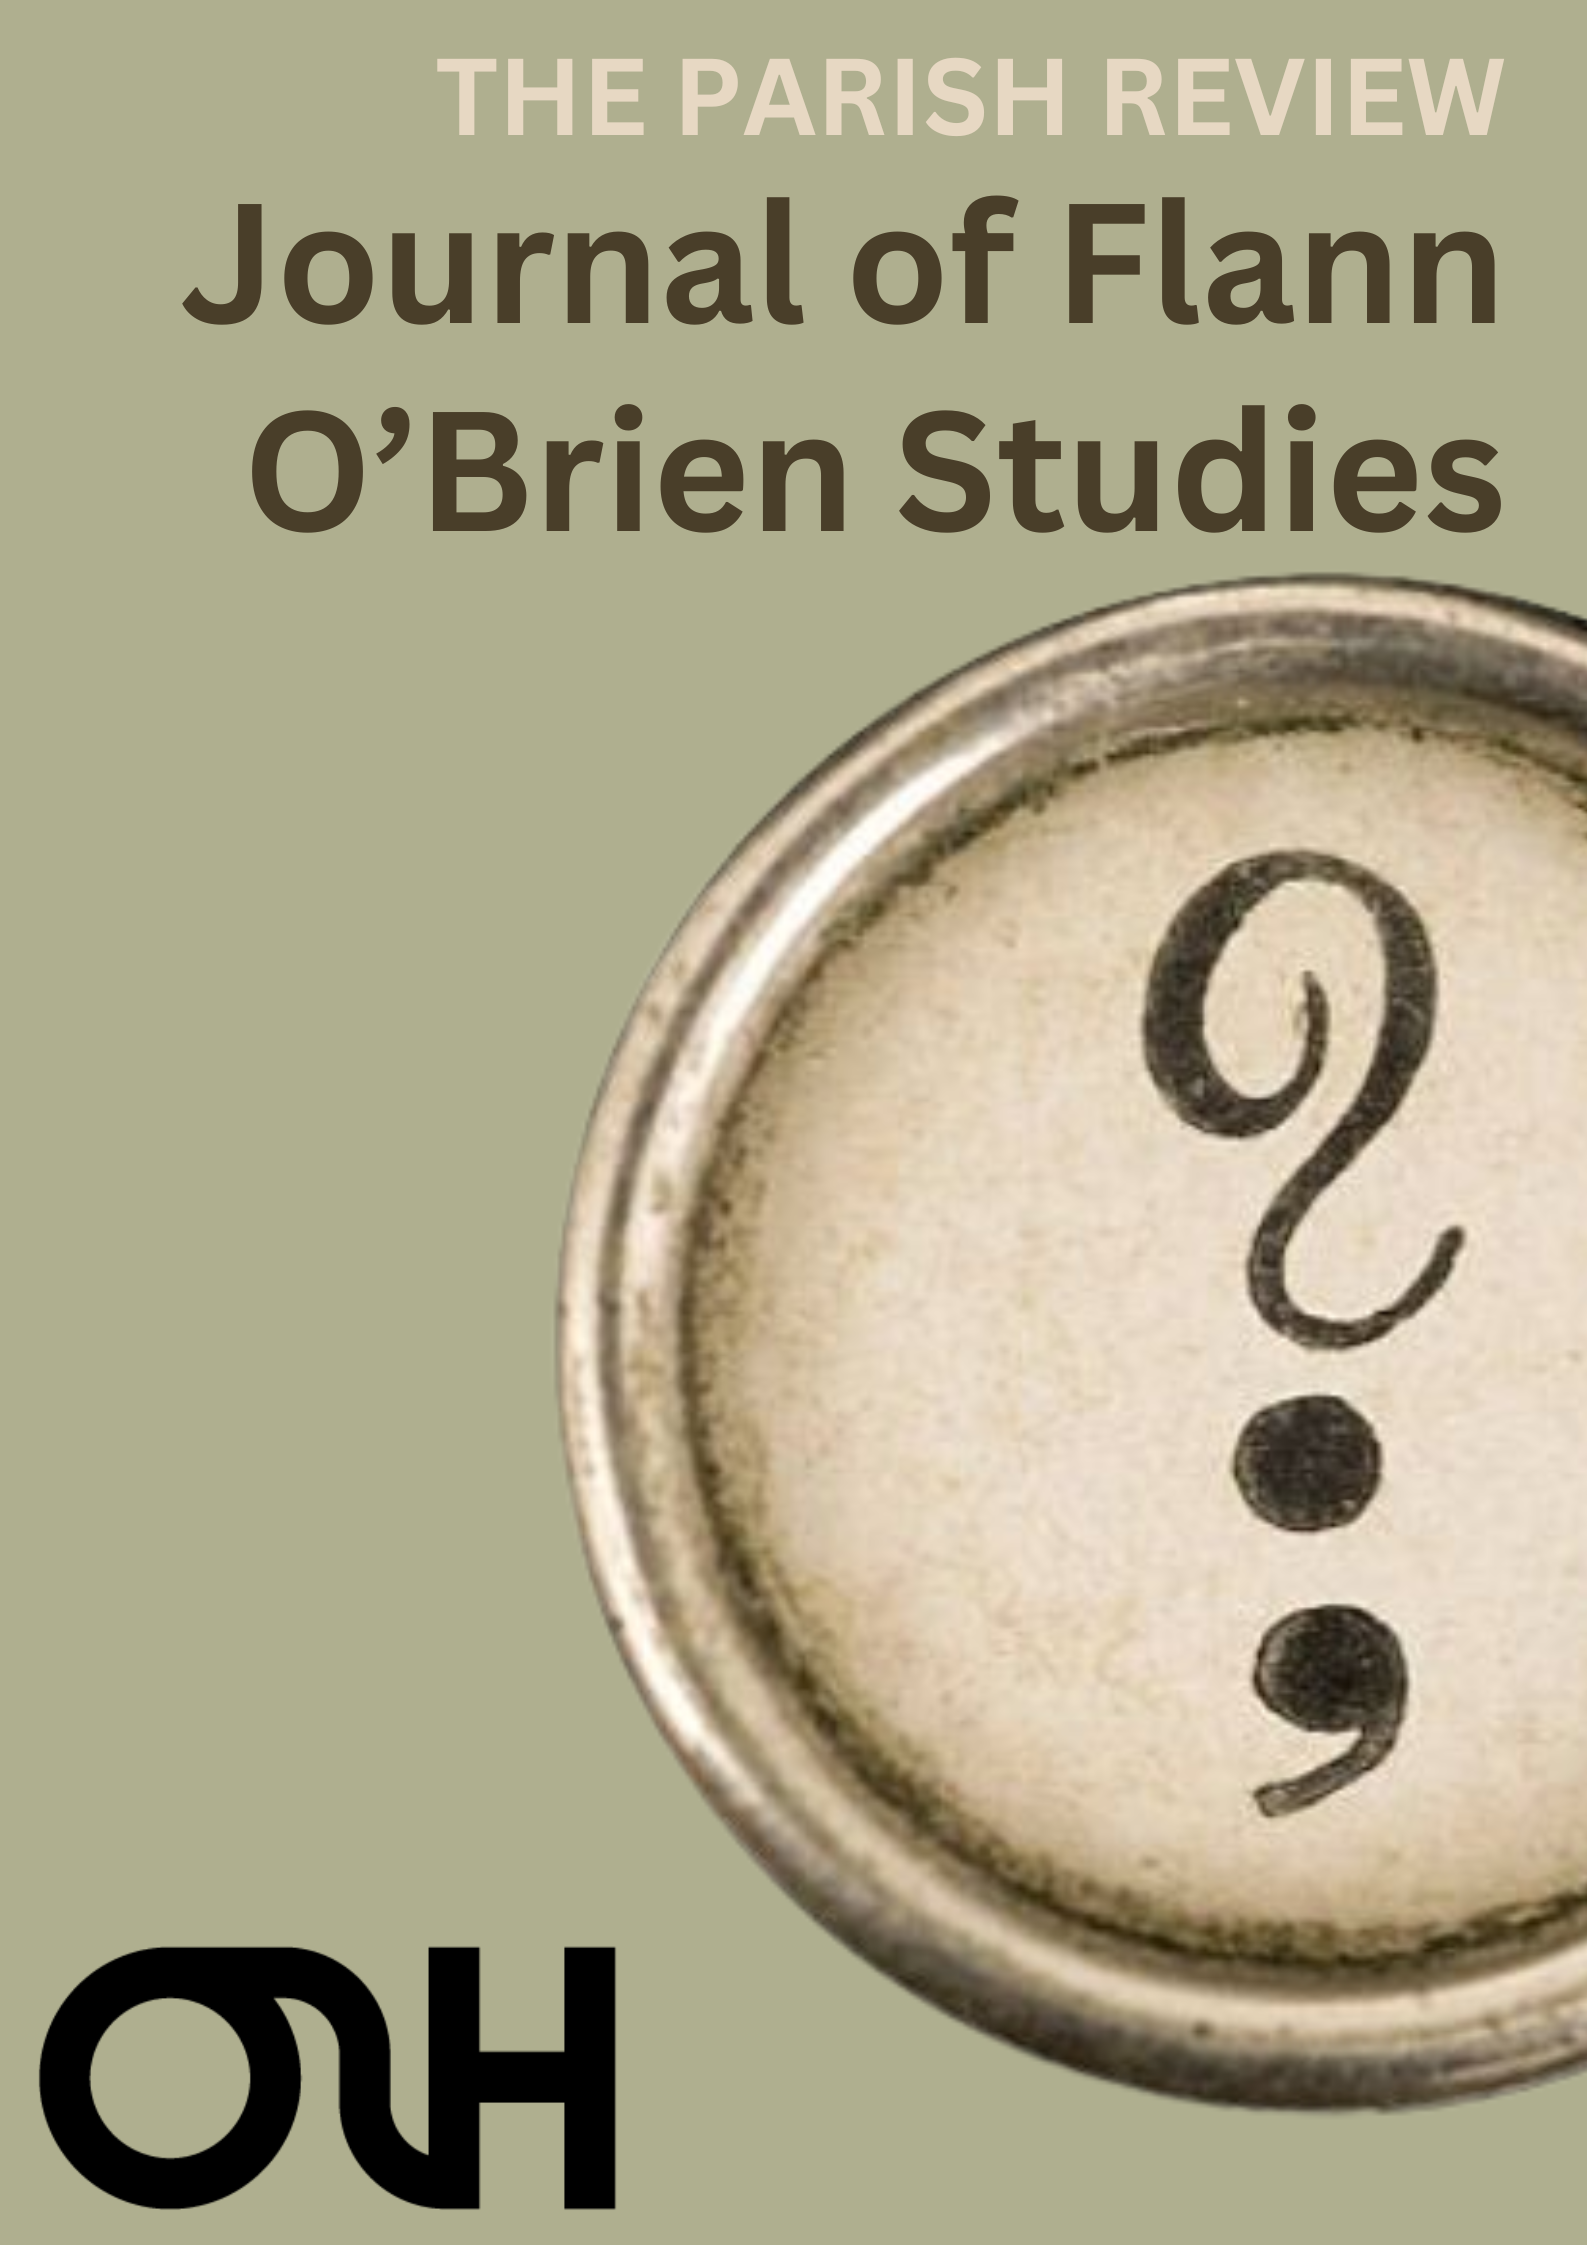 The Parish Review: Journal of Flann O'Brien Studies